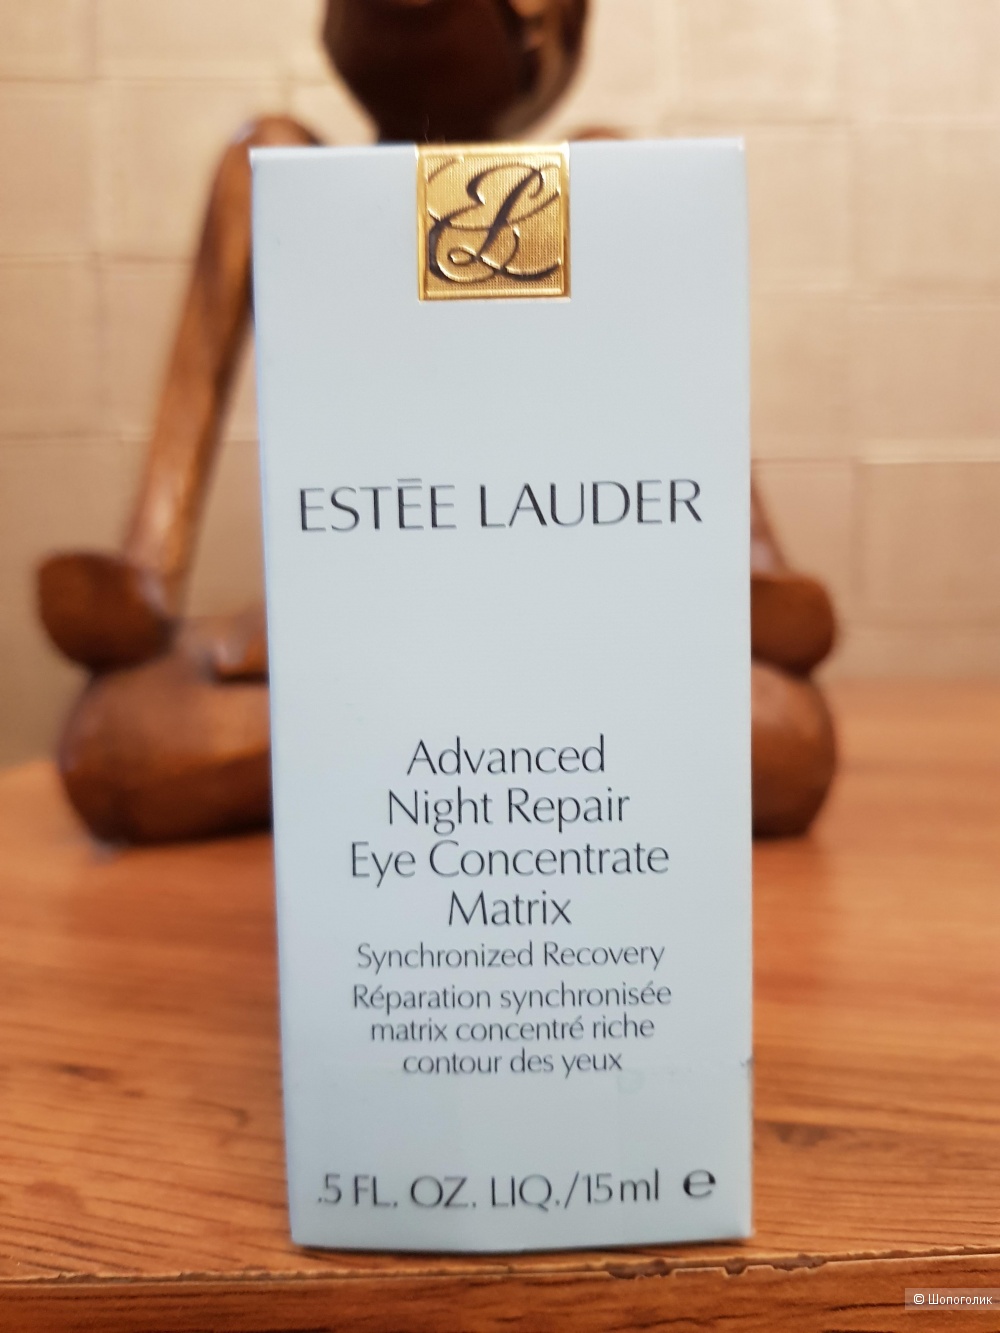 Estee Lauder Advanced Night Repair Eye Concentrate Matrix